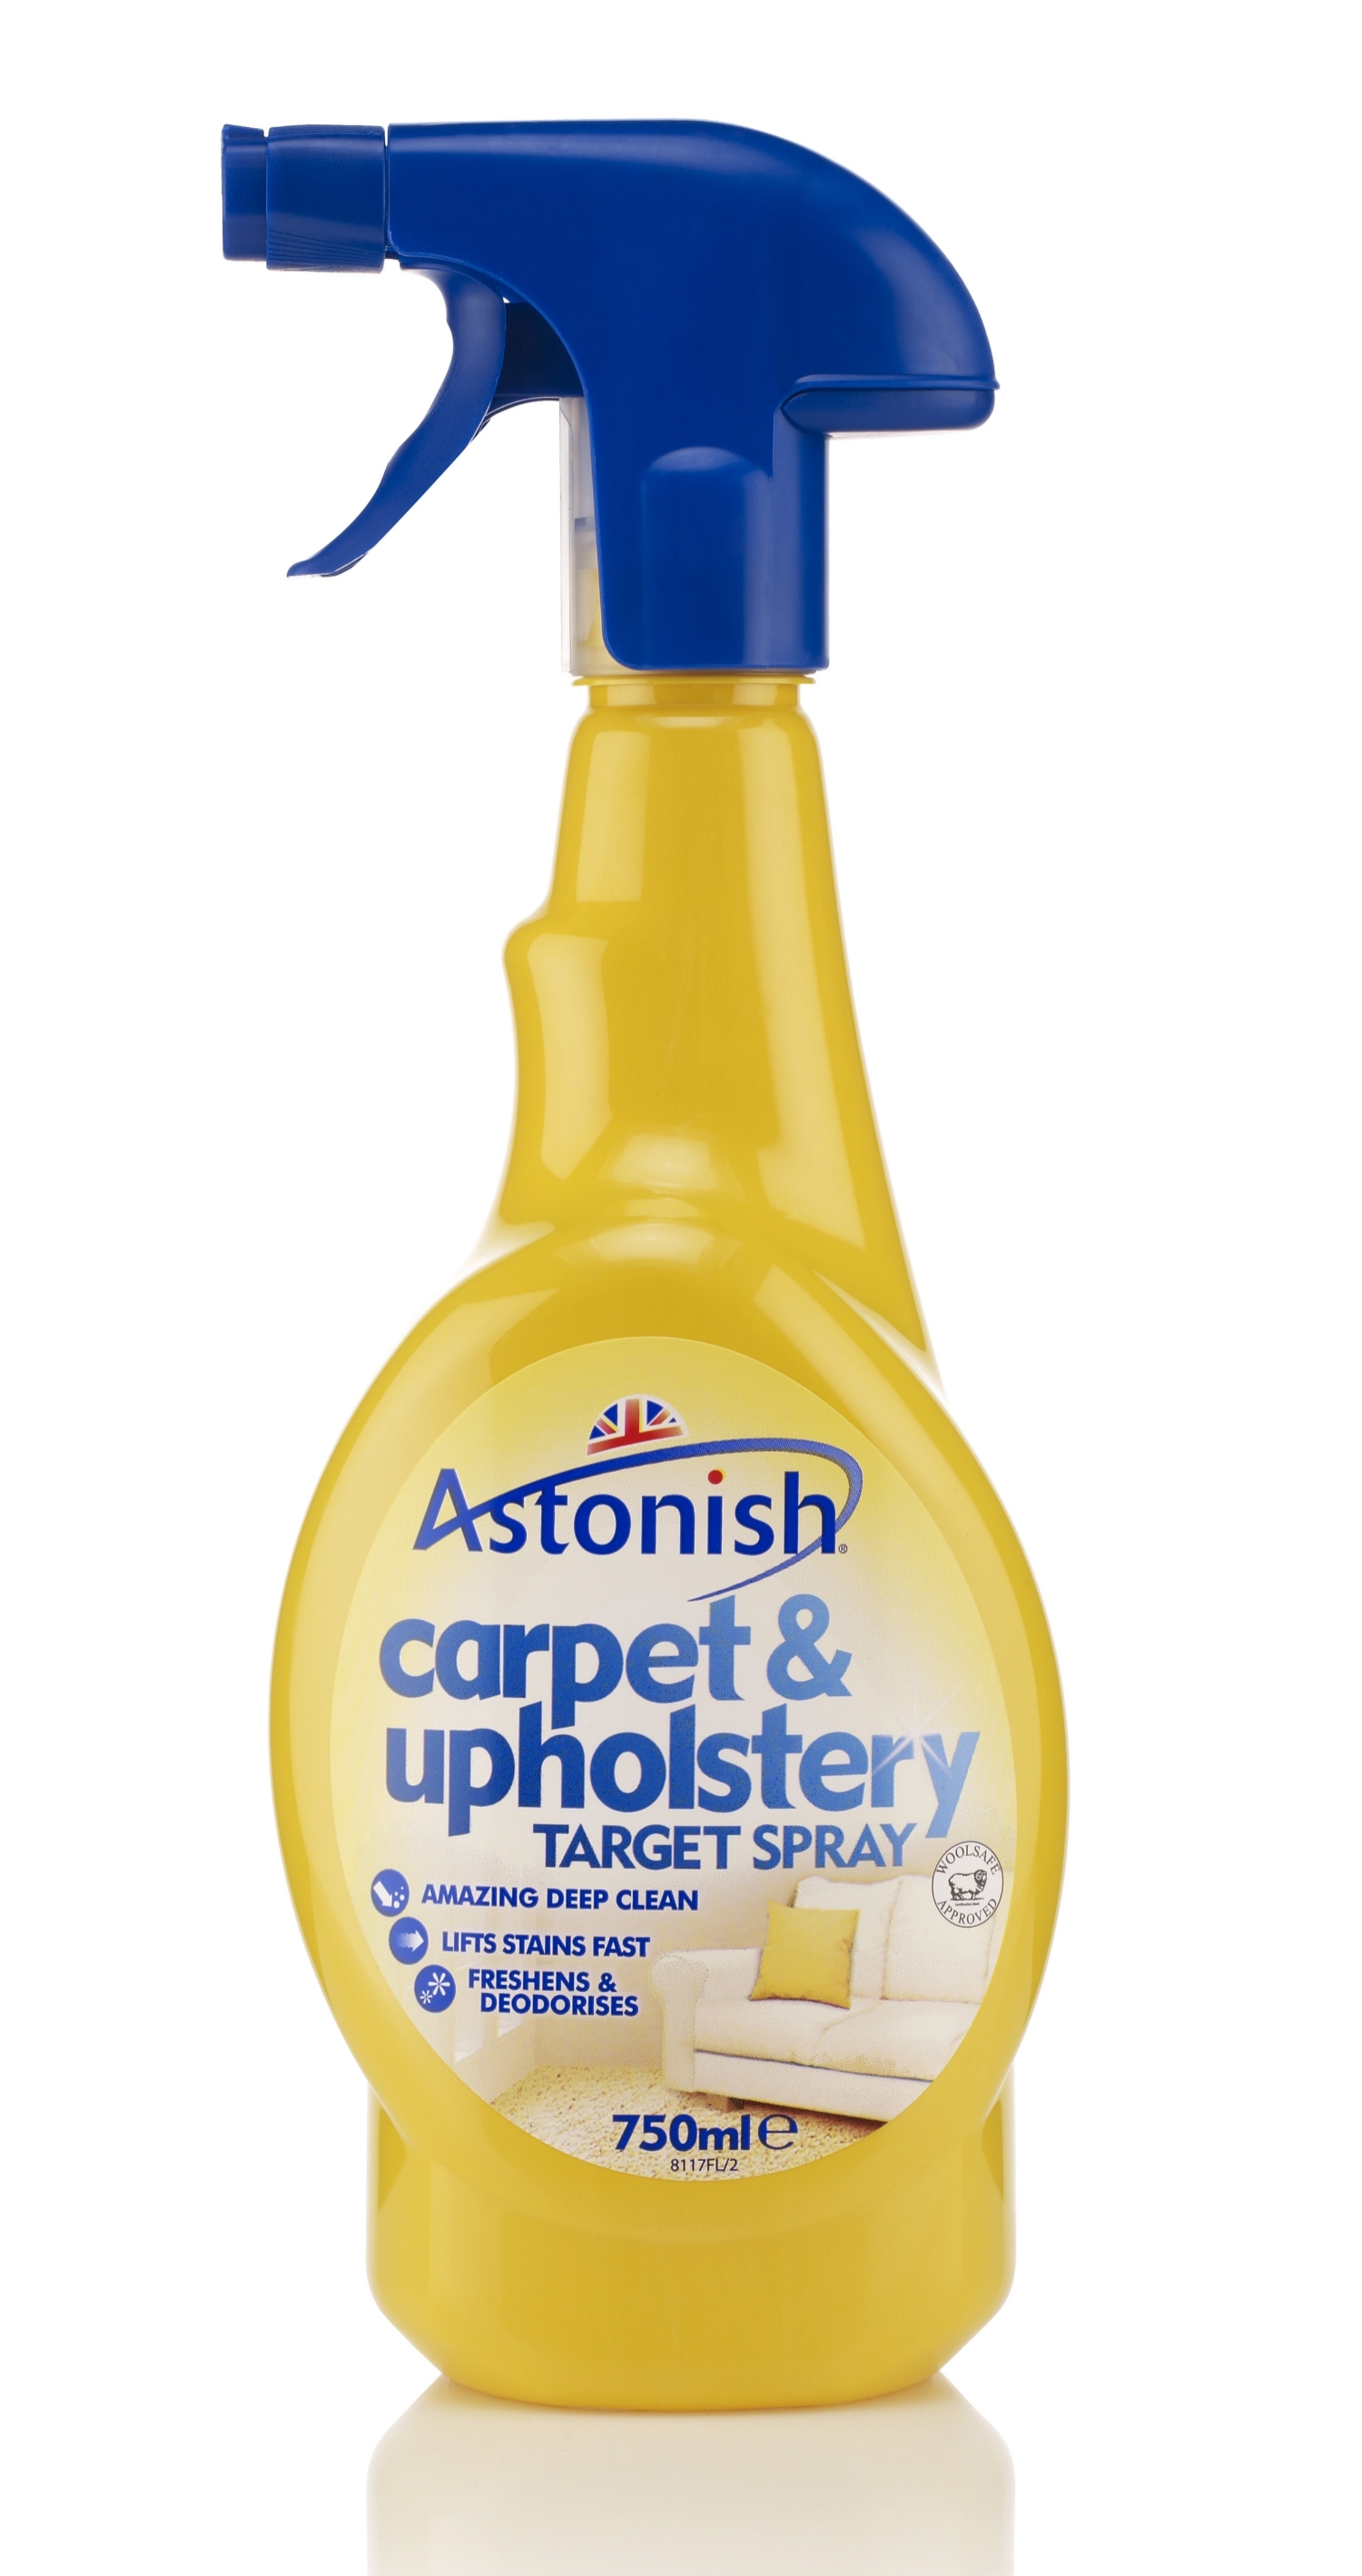 Astonish Carpet & Upholstery Target Spray 750ml Trigger.JPG